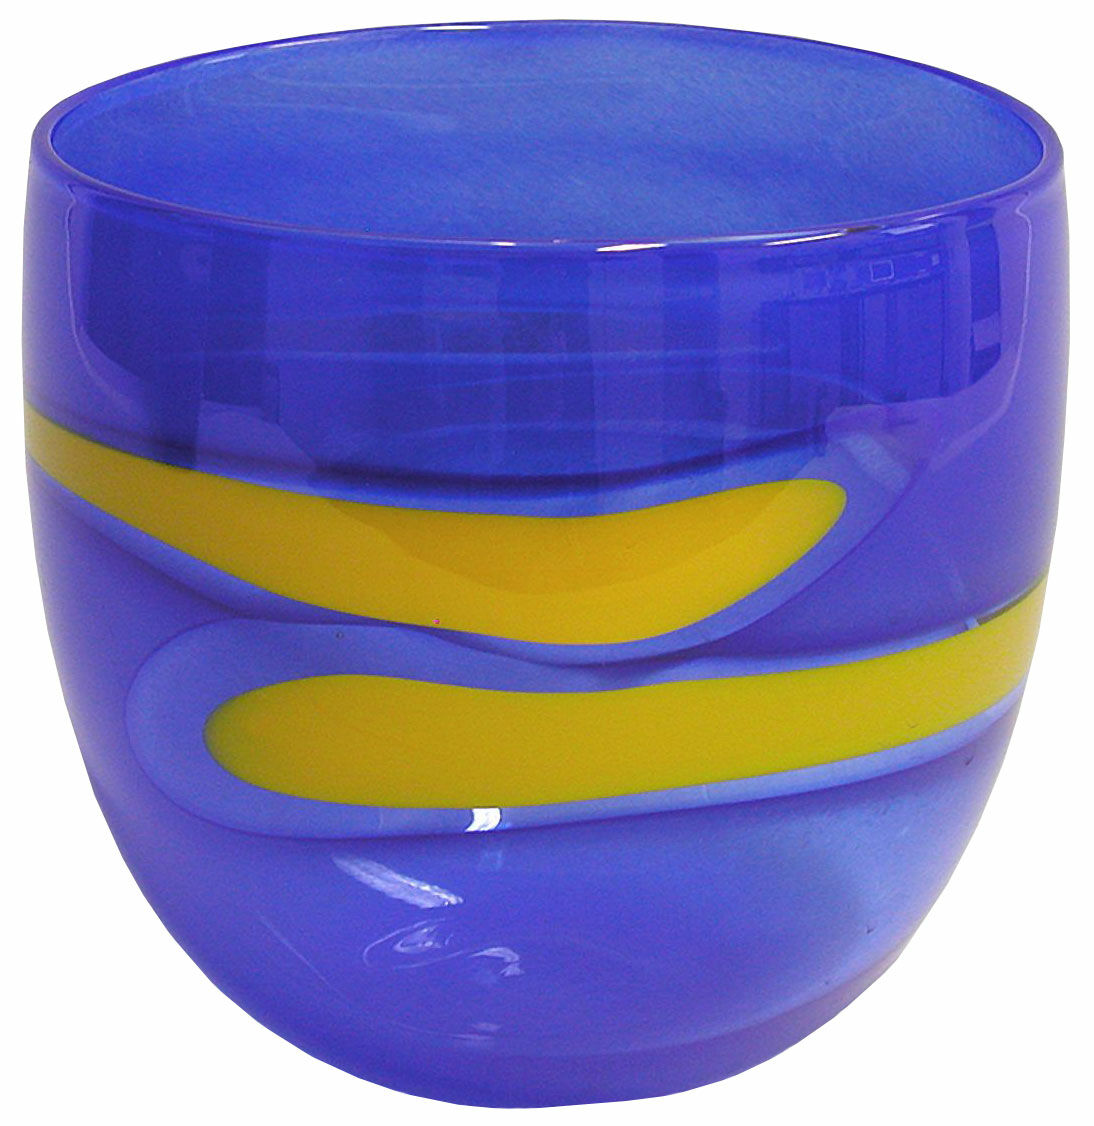 Glass vase / bowl "Cielo Azurro" by Hans Wudy